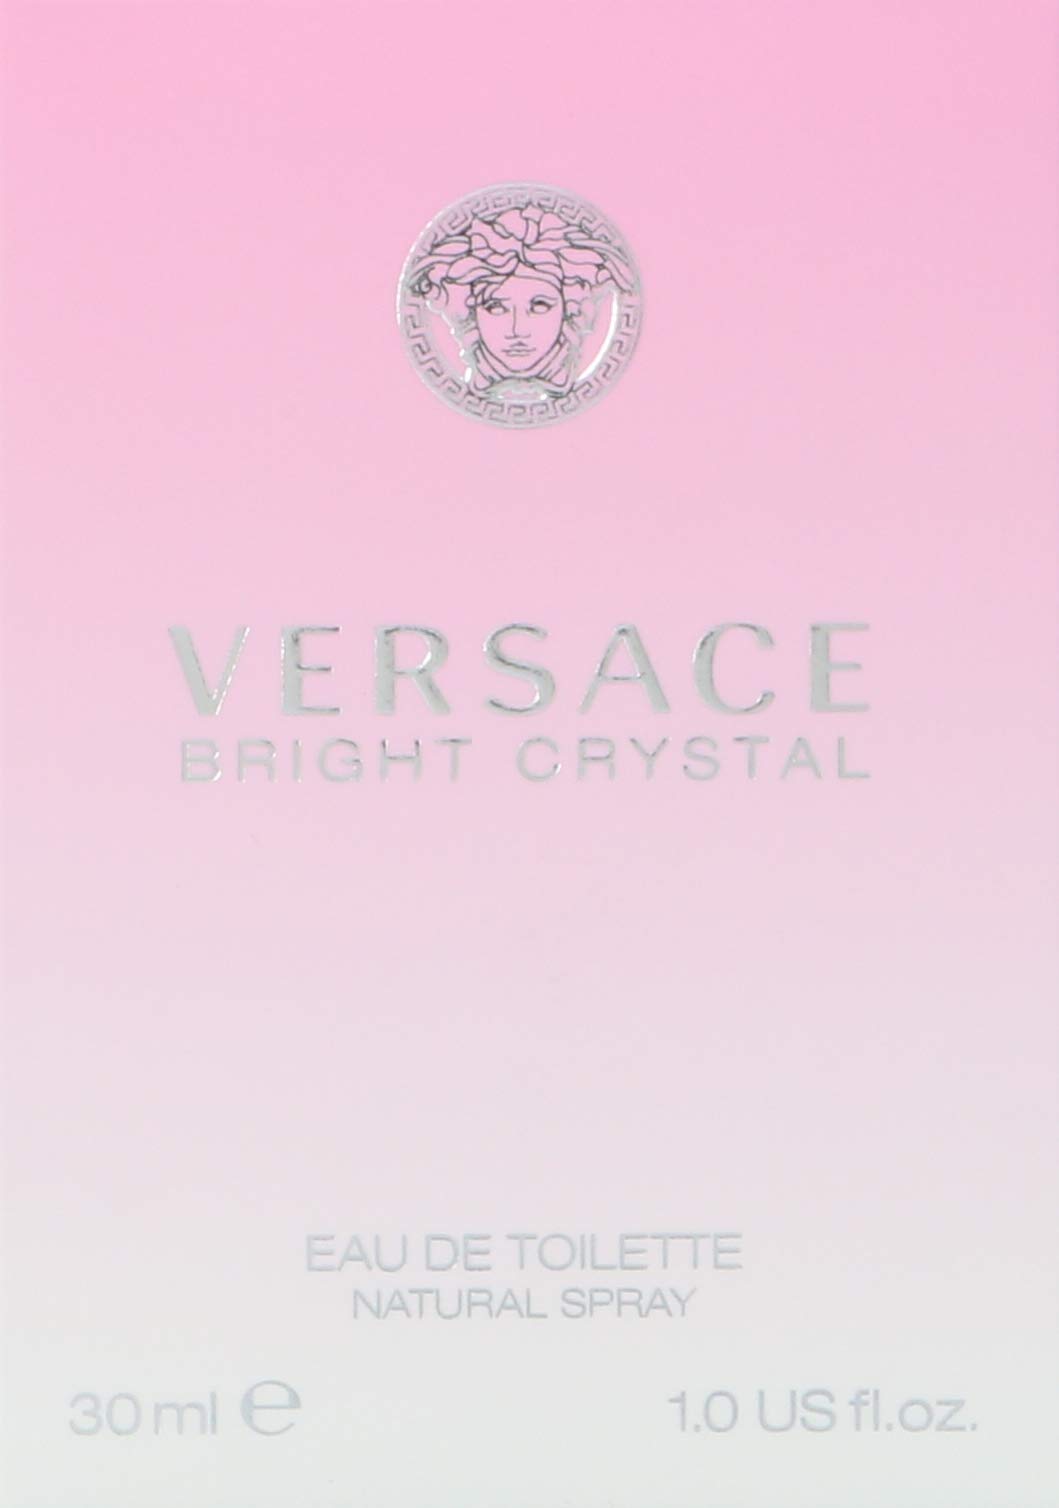 VERSACE BRIGHT CRYSTAL by Gianni Versace EDT SPRAY 3 OZ